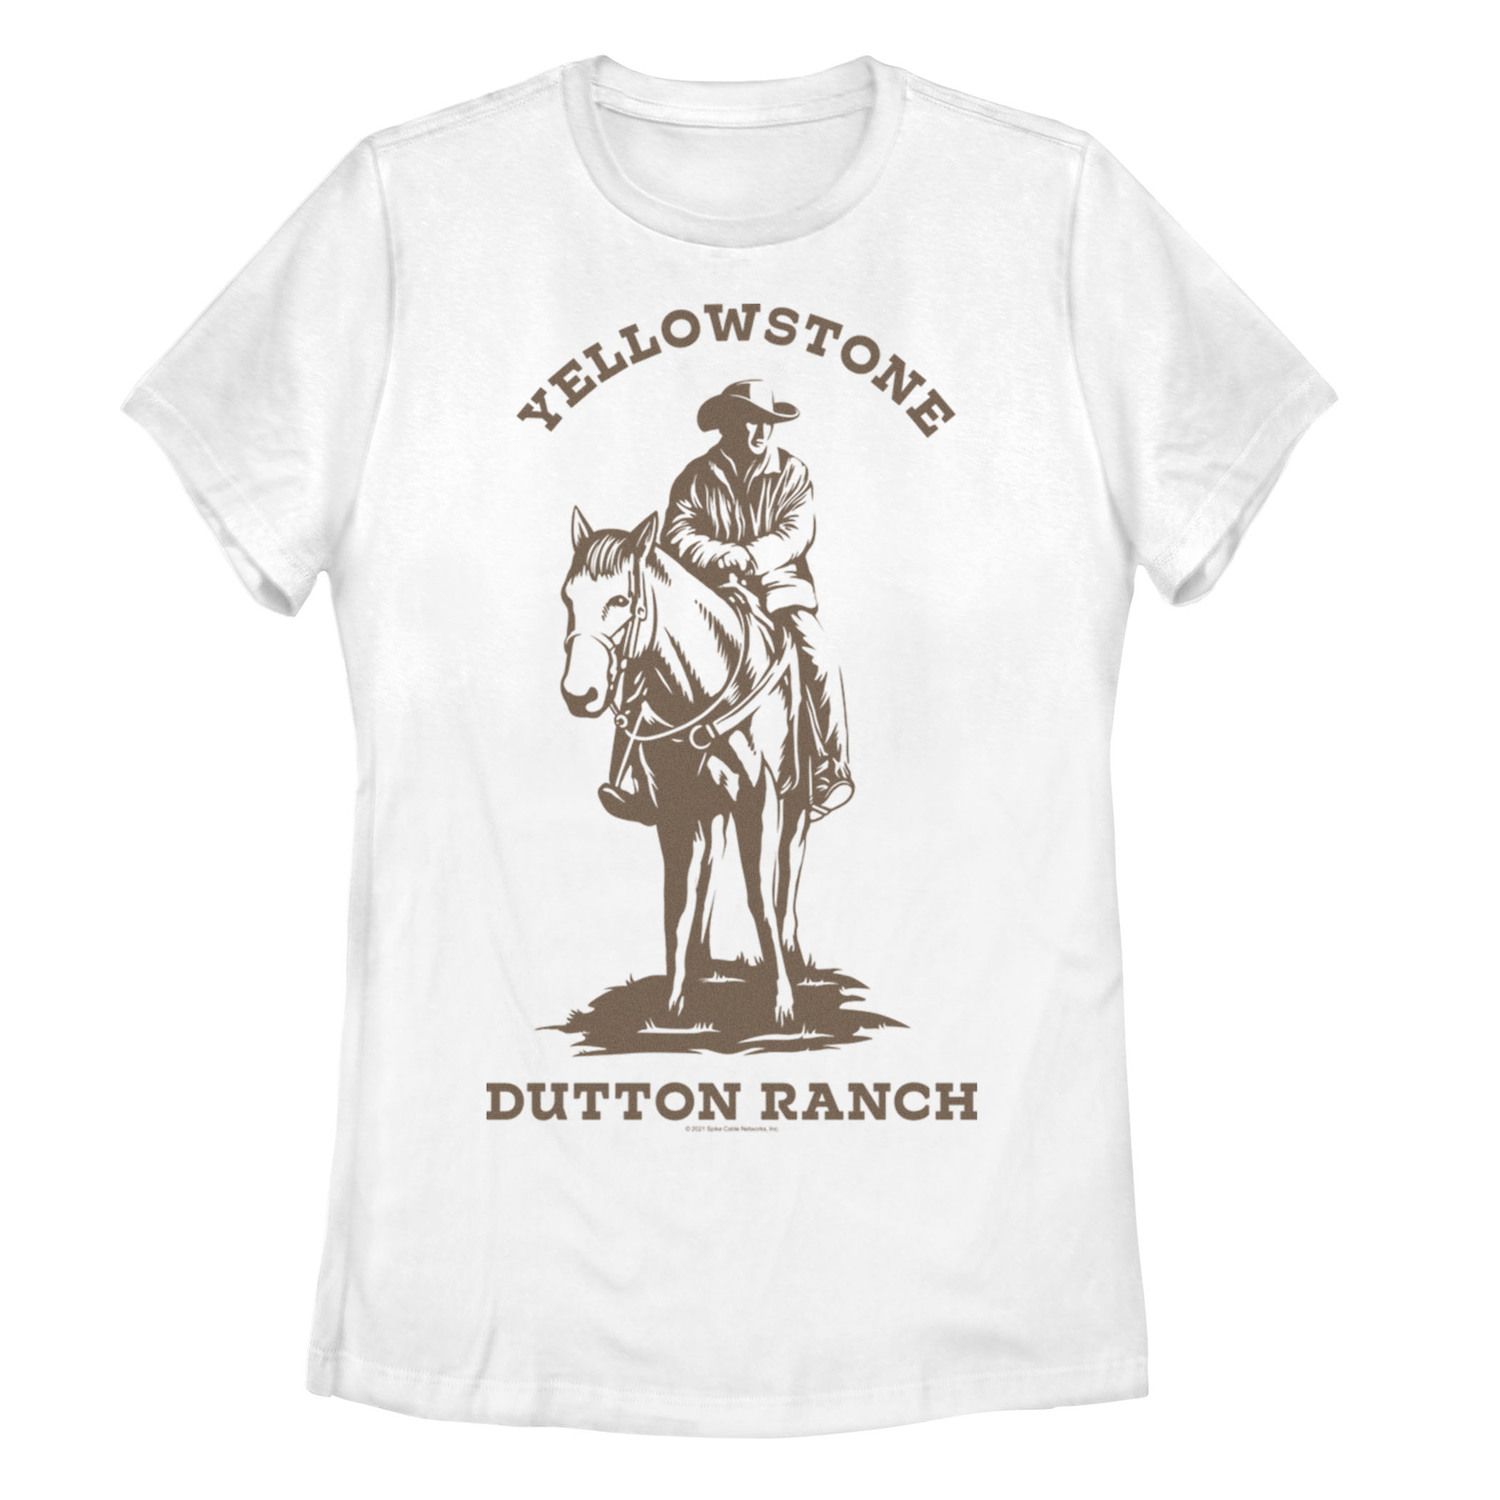 Юниорская футболка Yellowstone Dutton Ranch Montana John Dutton с графическим рисунком Licensed Character